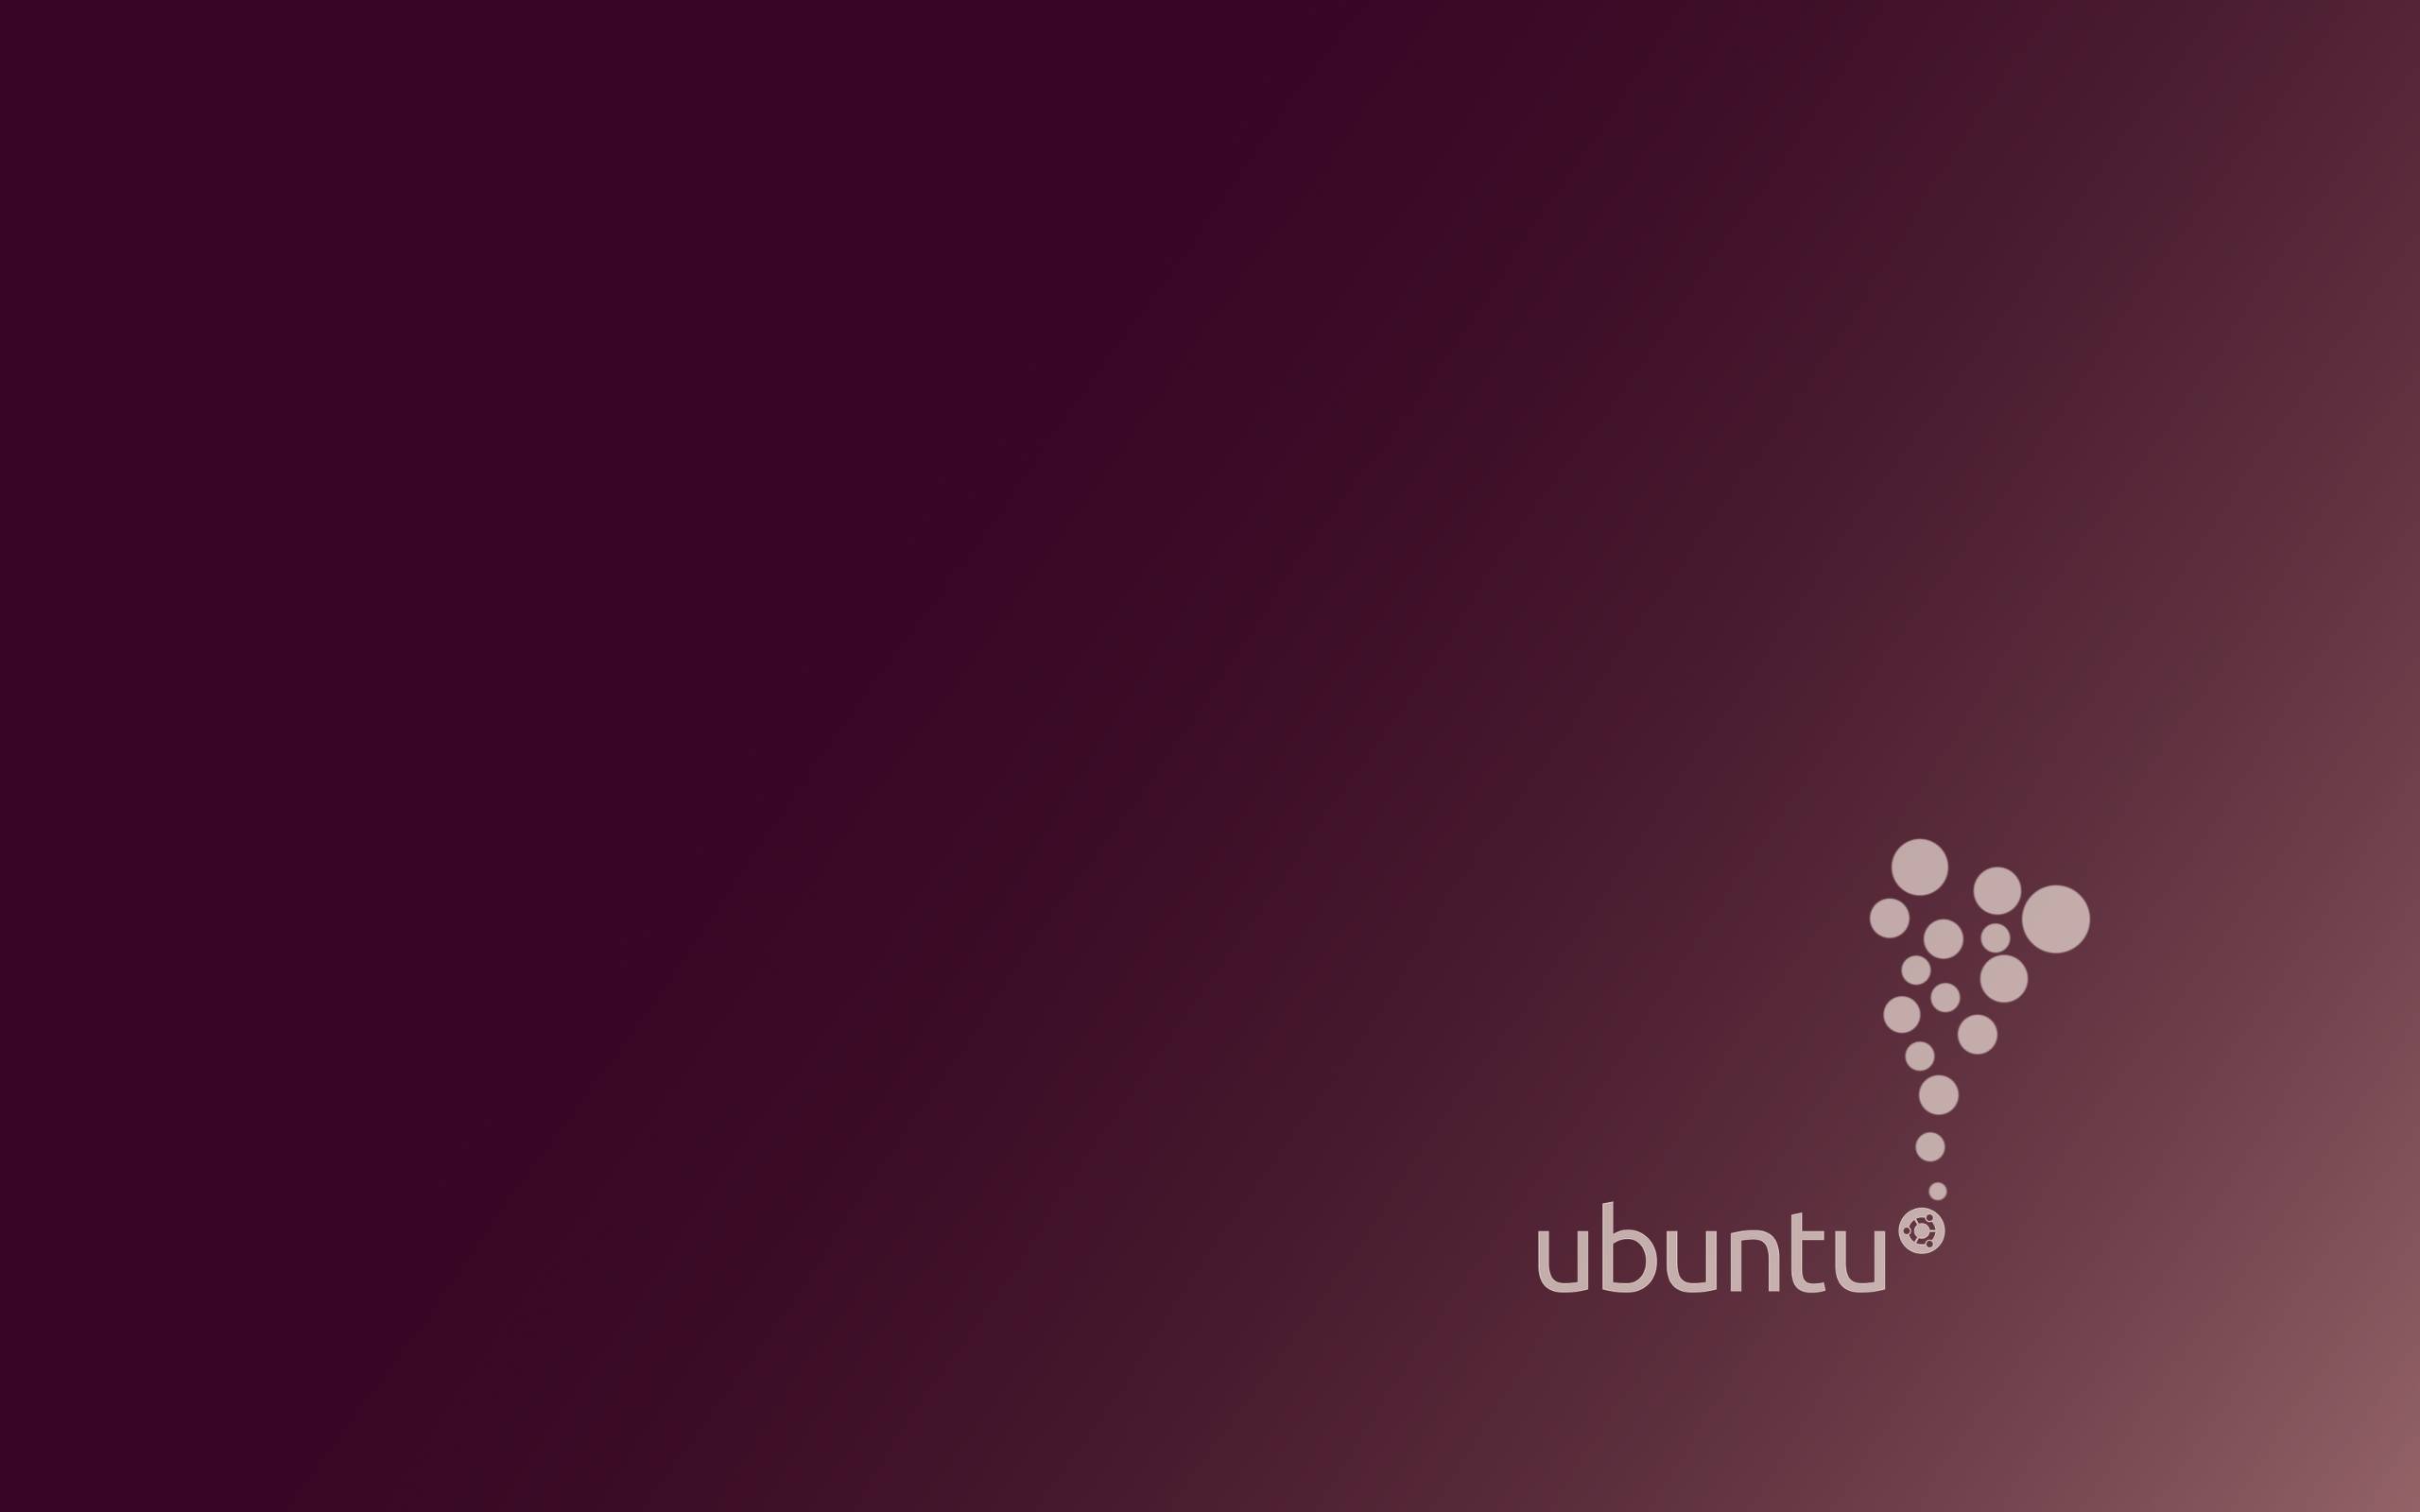 Cool Ubuntu Backgrounds - Wallpaper Cave